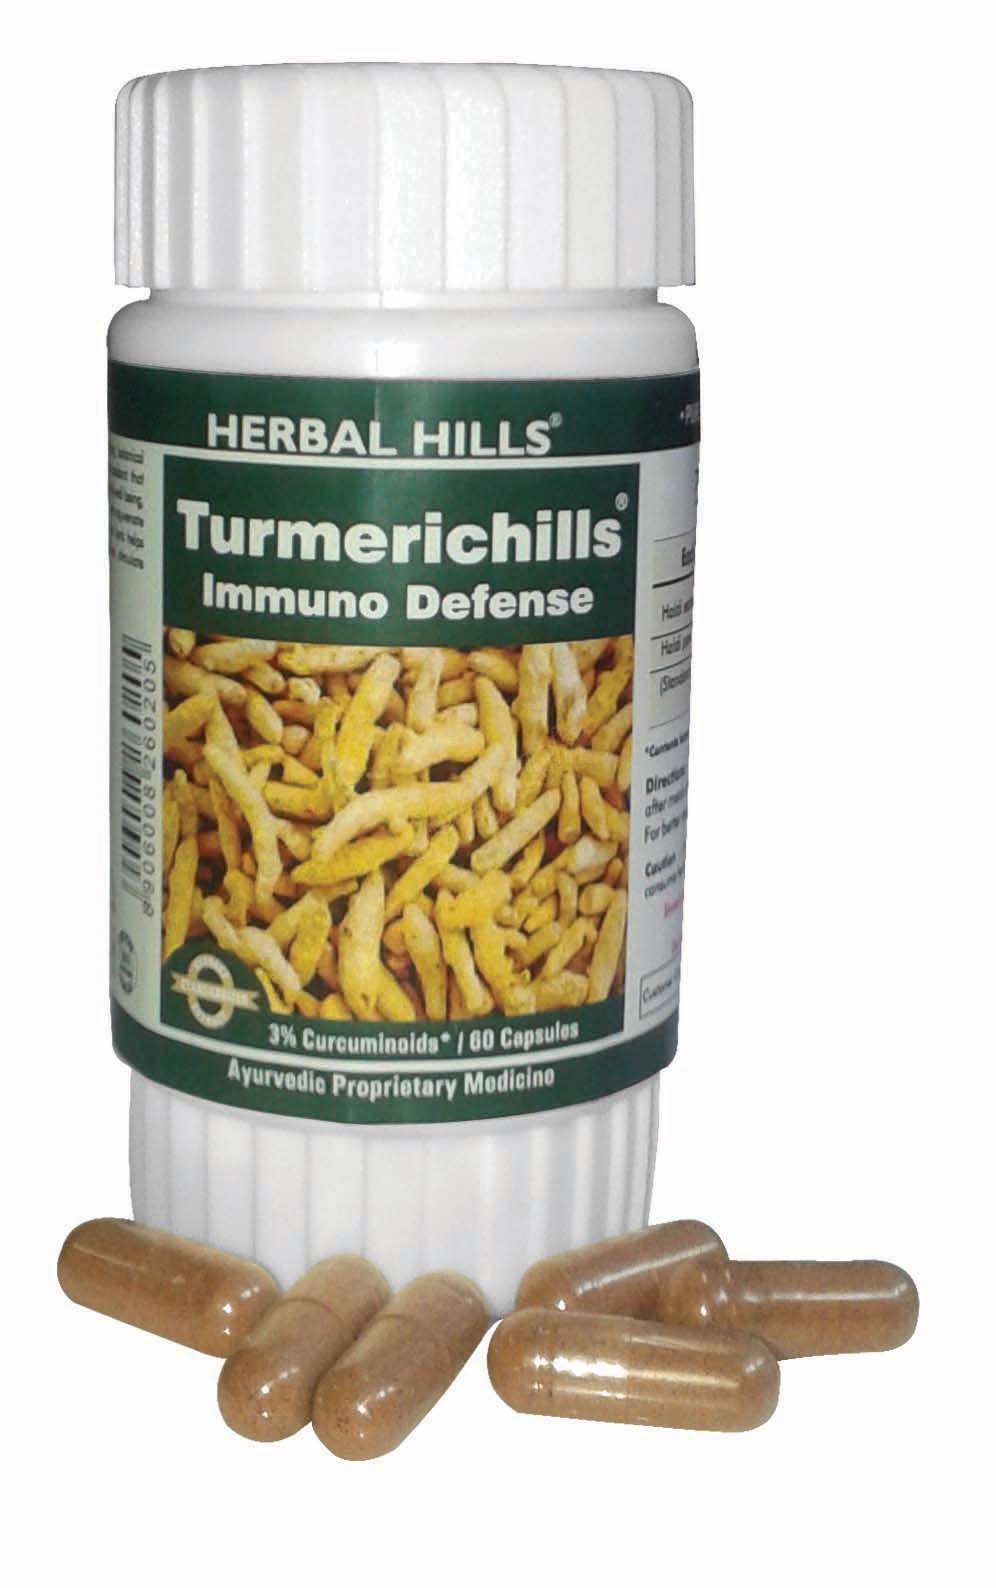 Buy Herbal Hills Turmerichills Capsules at Best Price Online